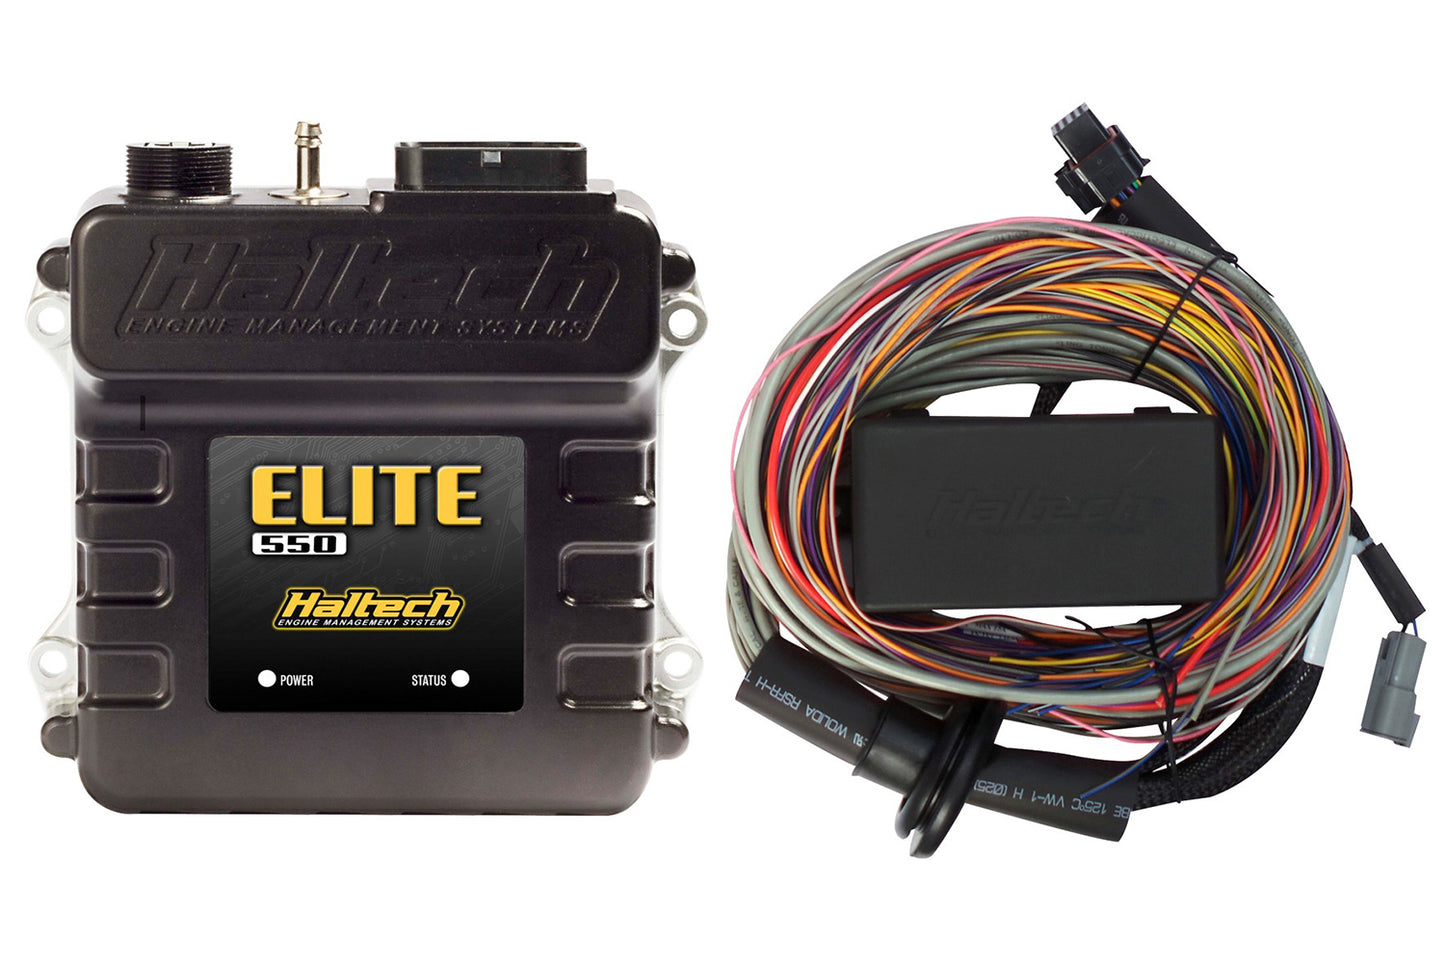 Haltech Elite 550 - Engine Management System